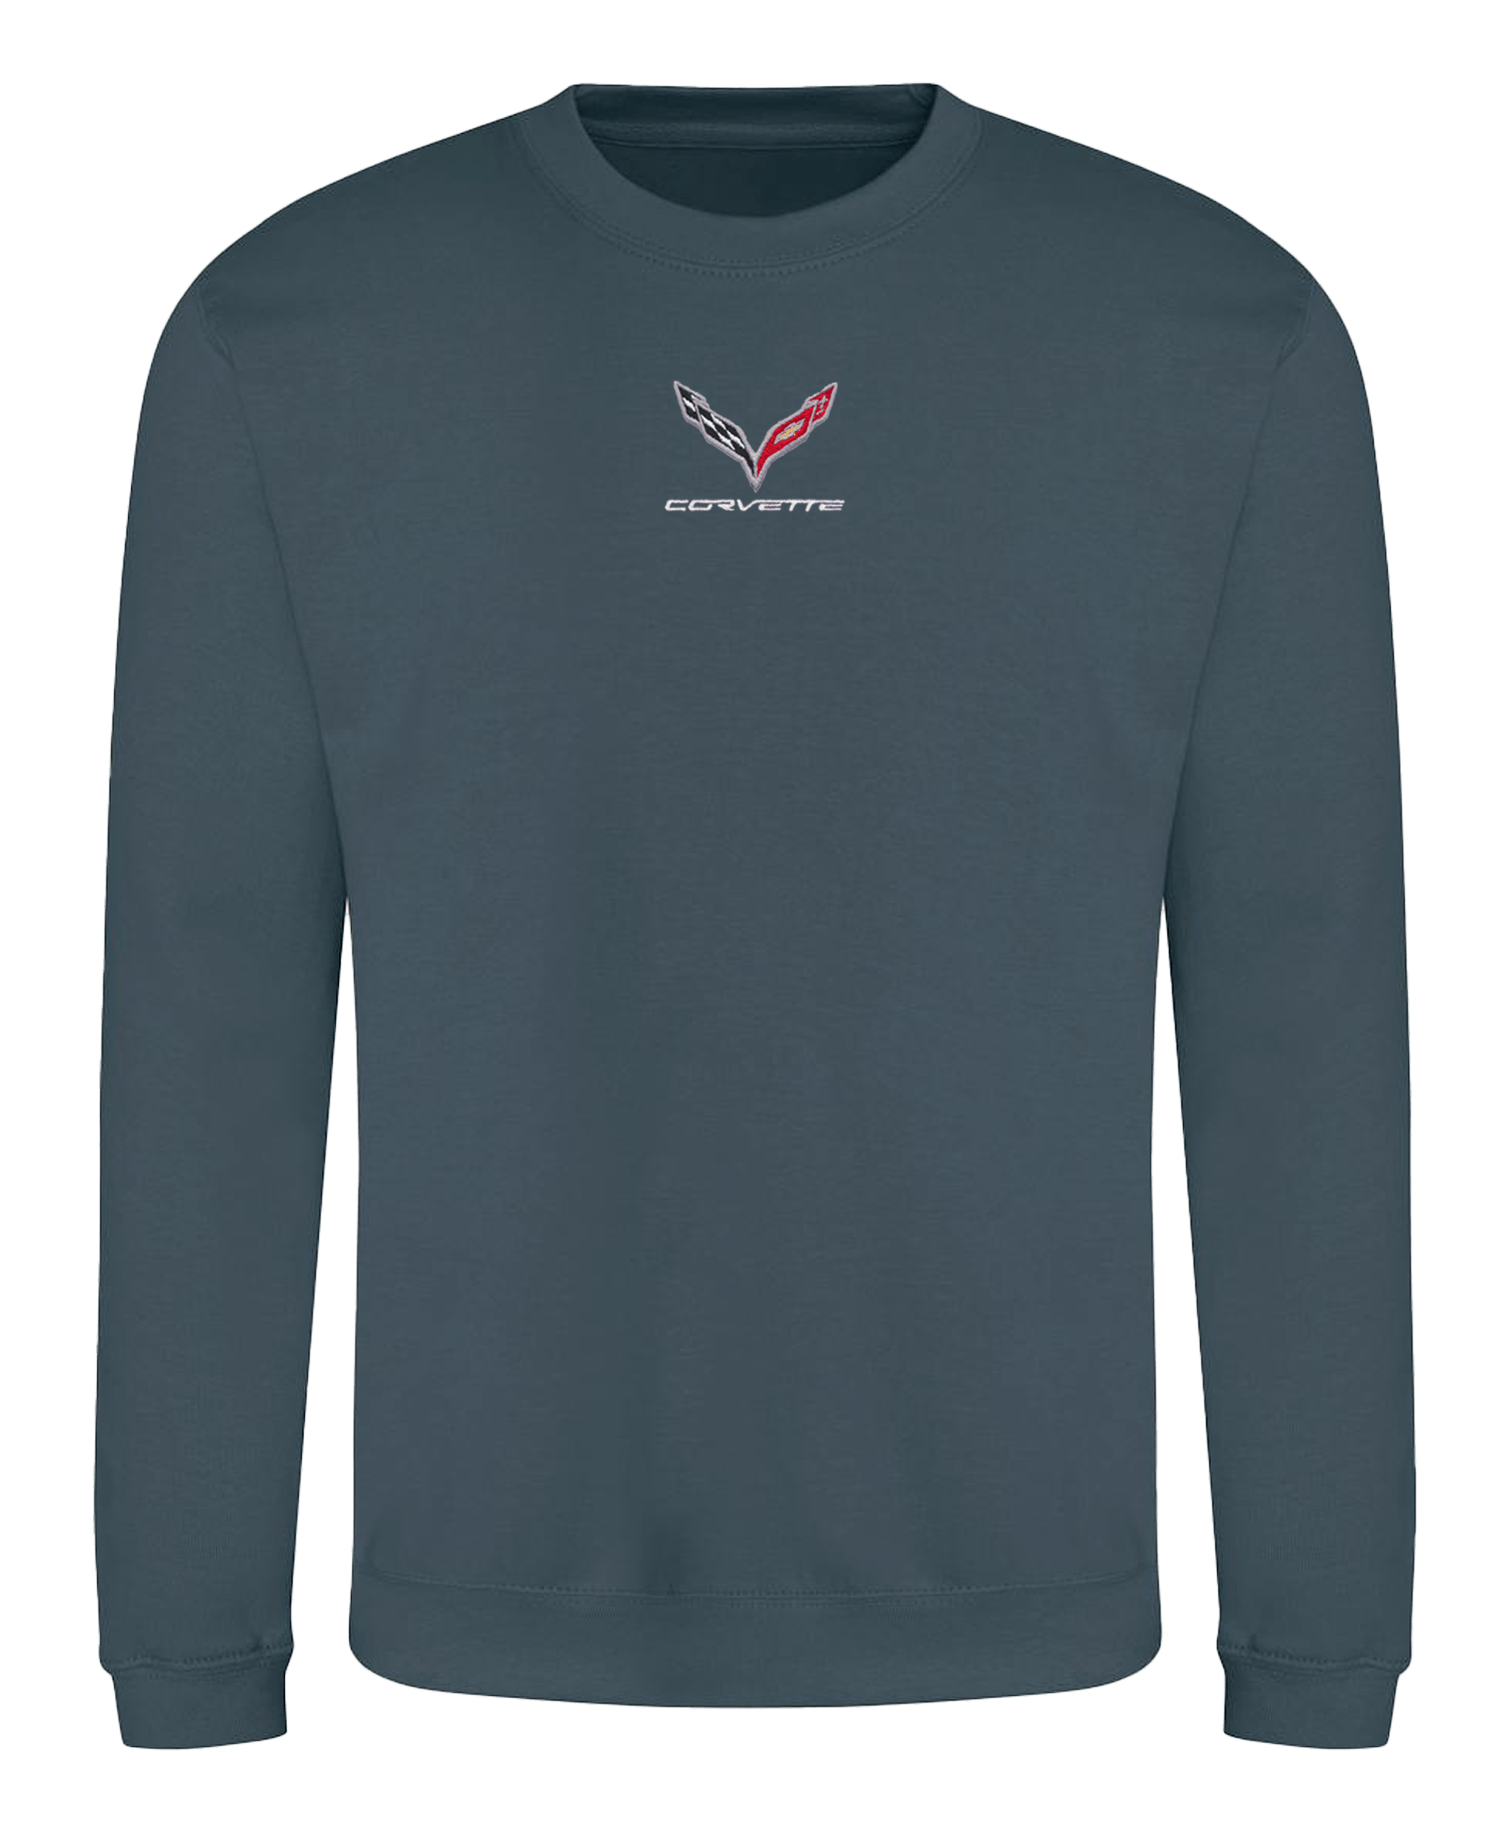 c7-corvette-embroidered-crew-neck-sweatshirt-cvr60011107-4-corvette-store-online